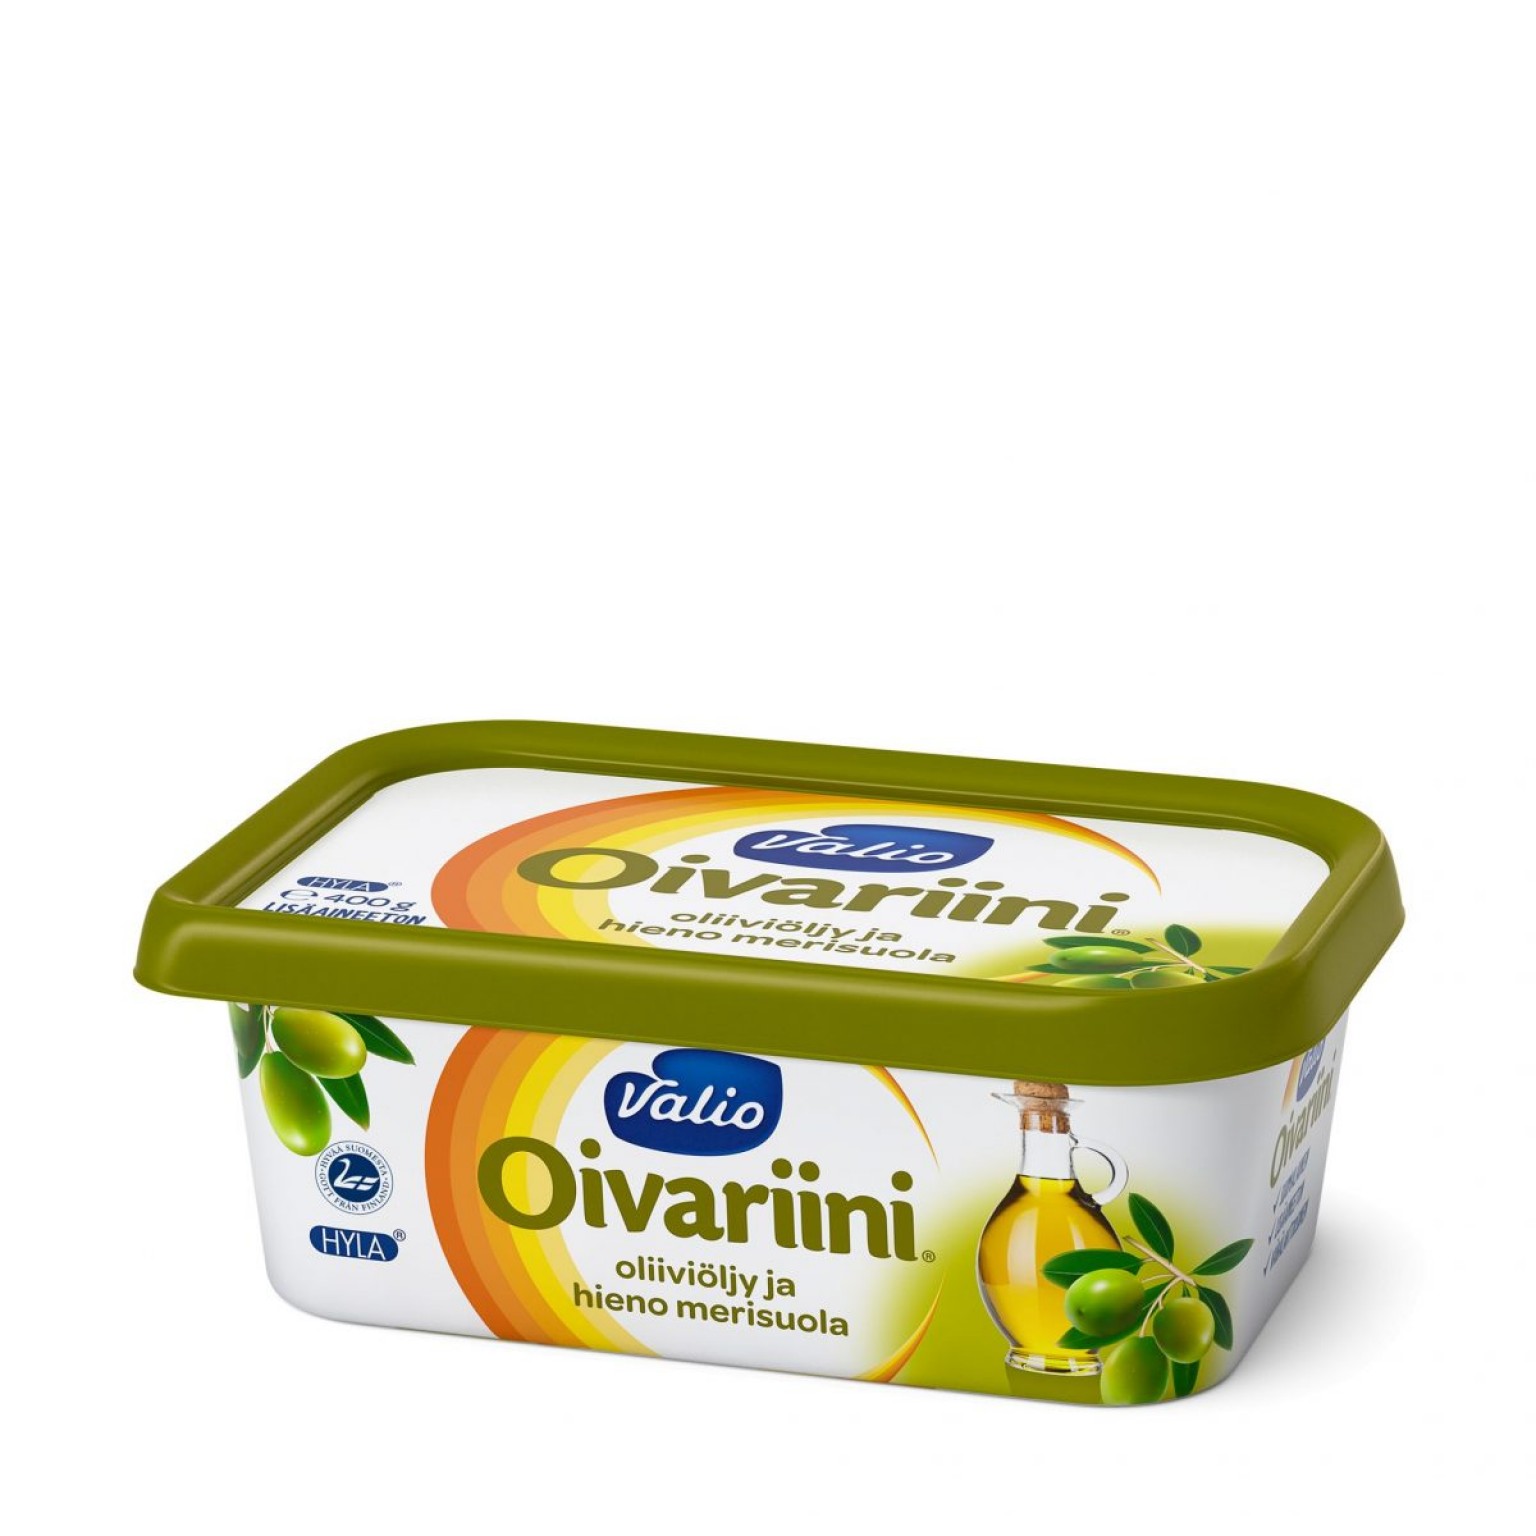 Финское масло Oivariini